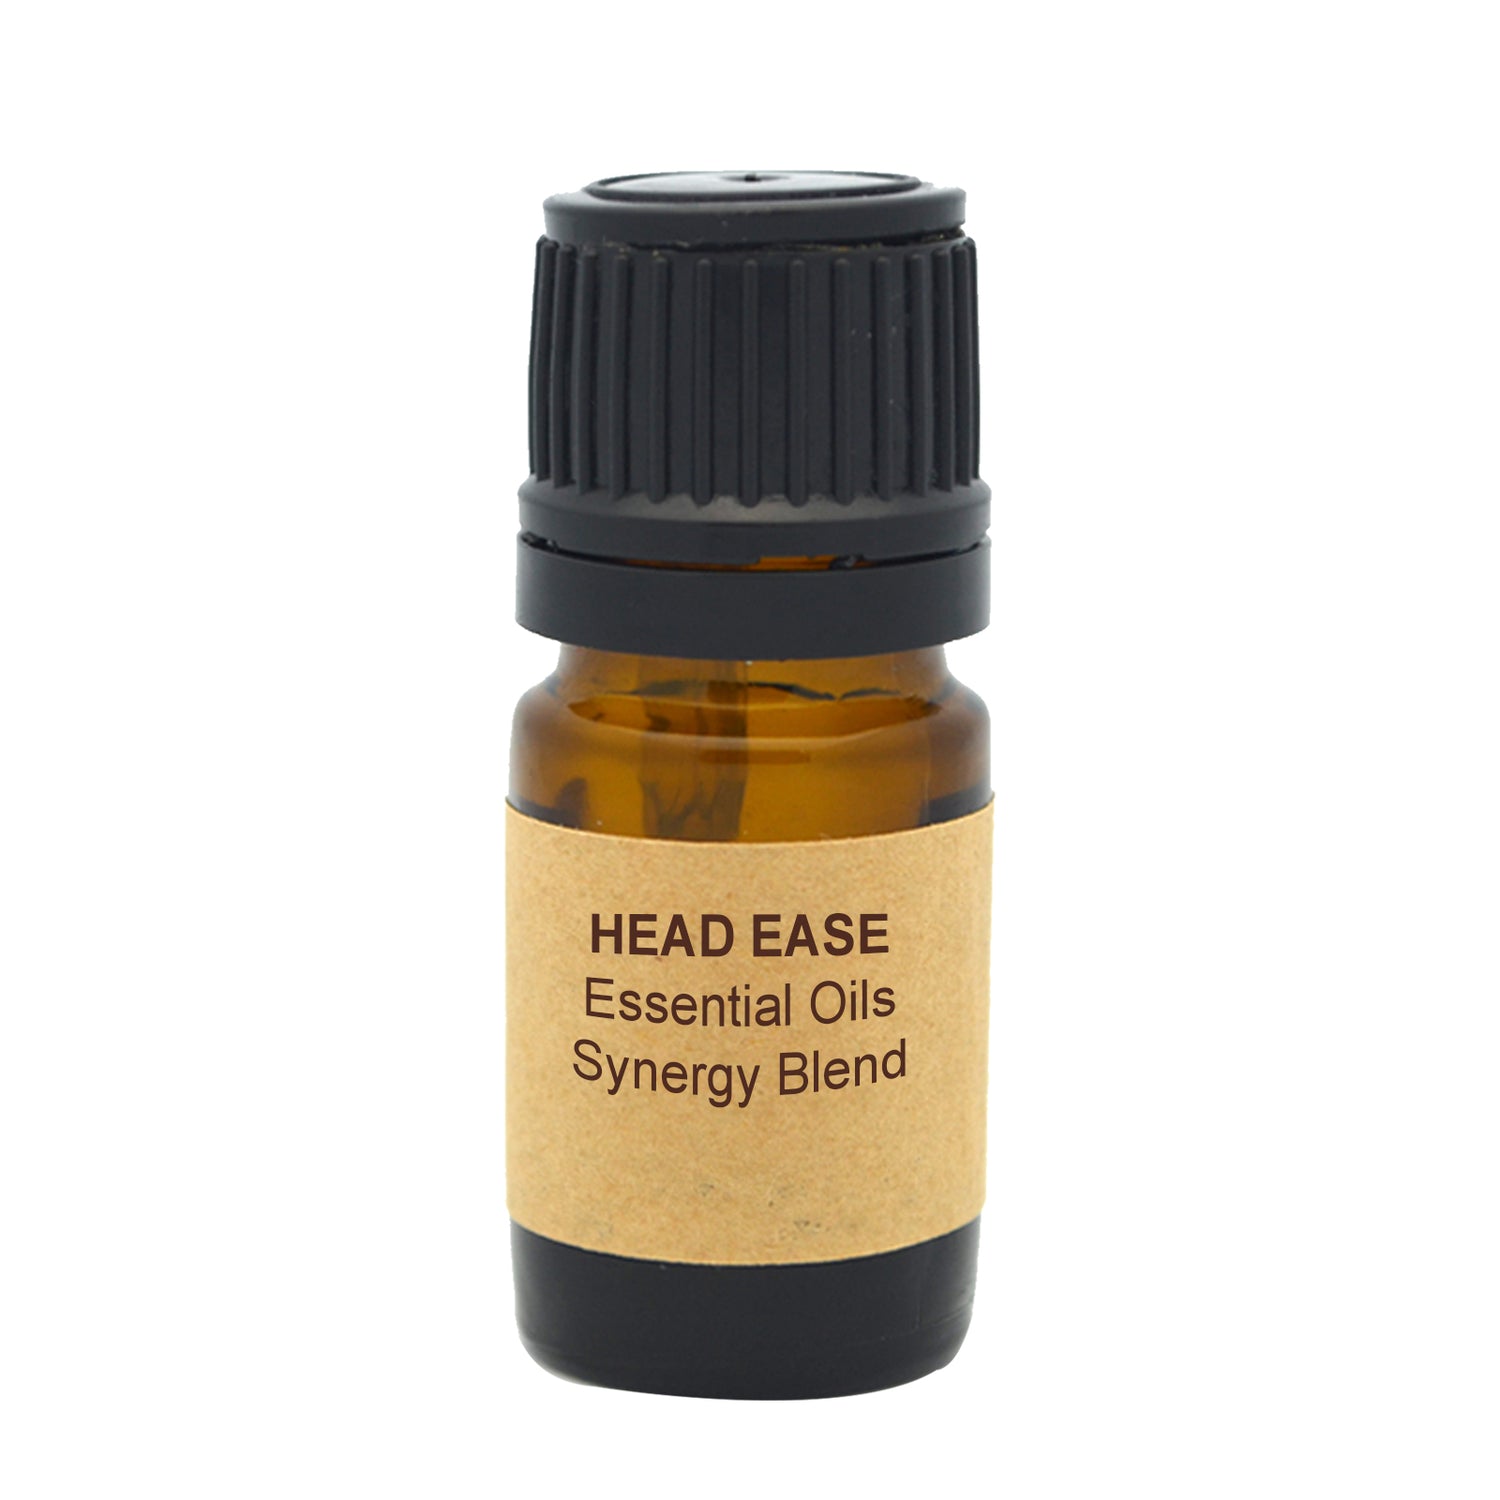 Head Ease Essential Oils Synergy Blend.